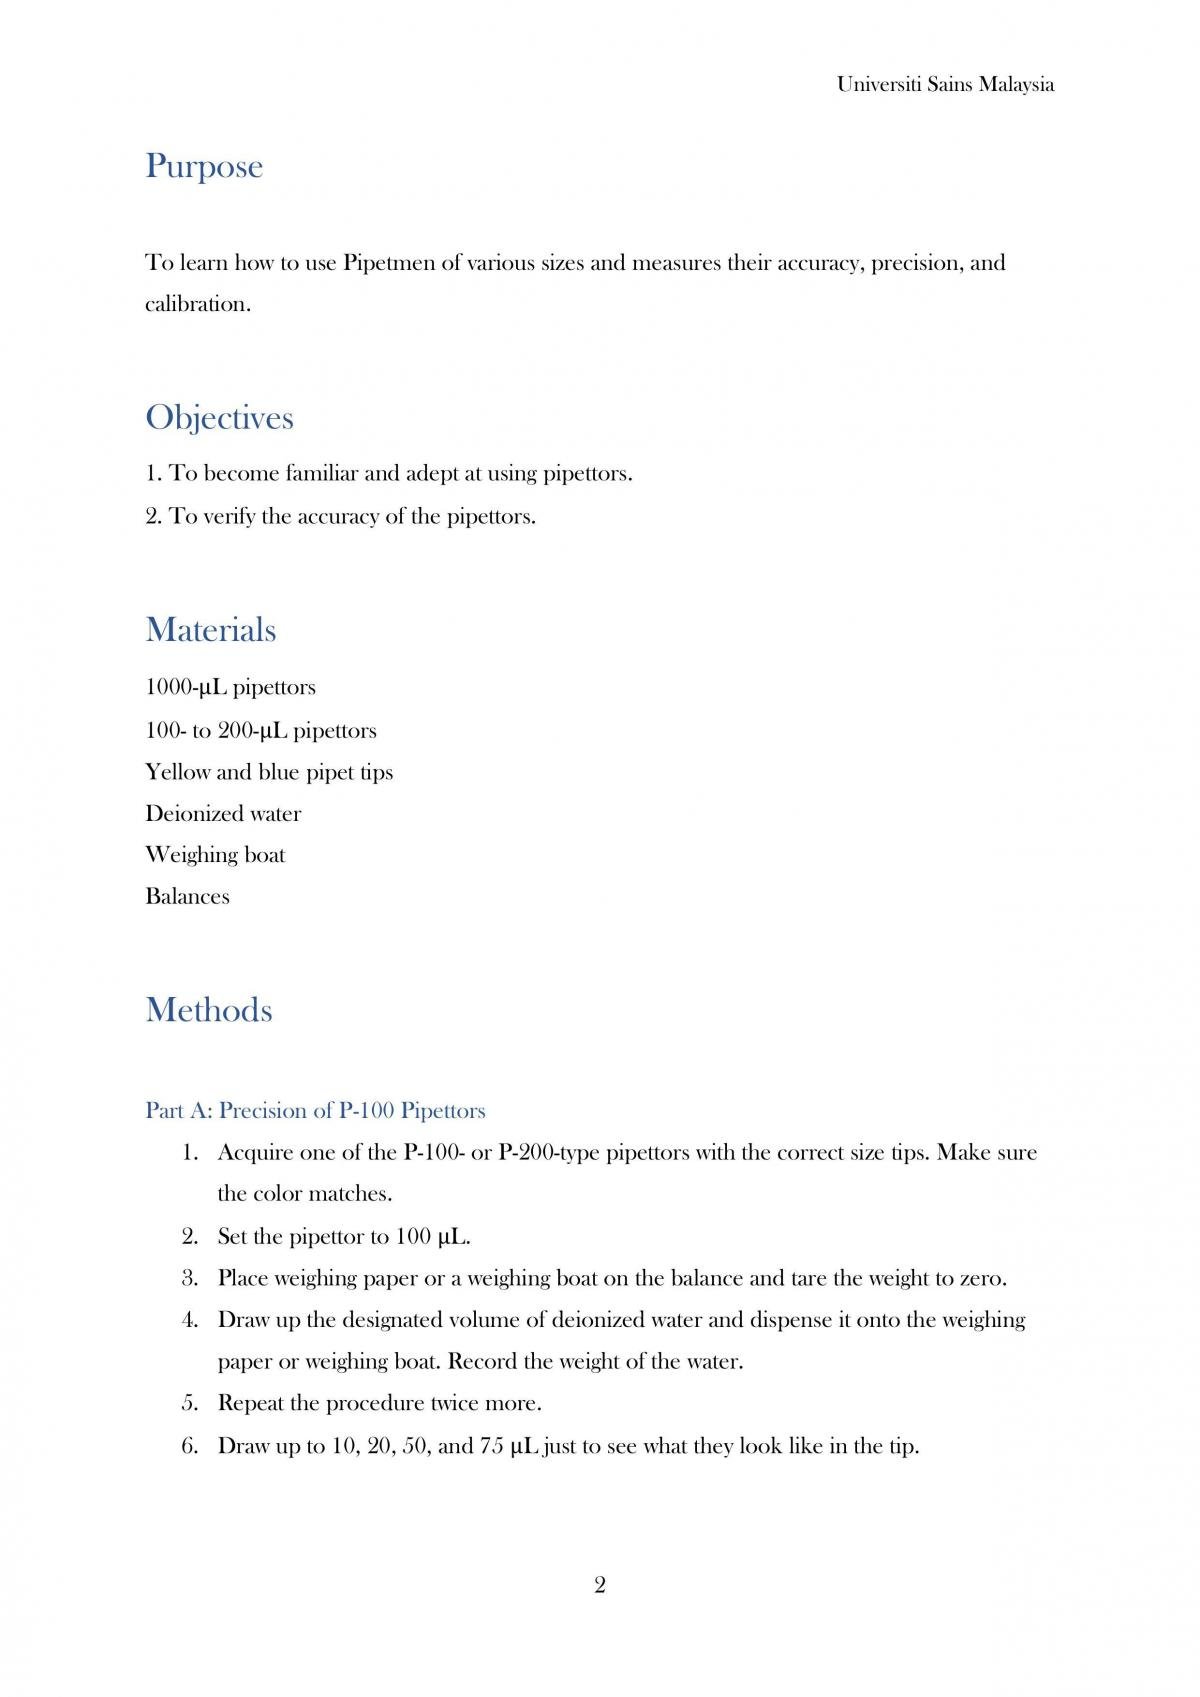 BOI206 Basics in Biochemistry - Page 2